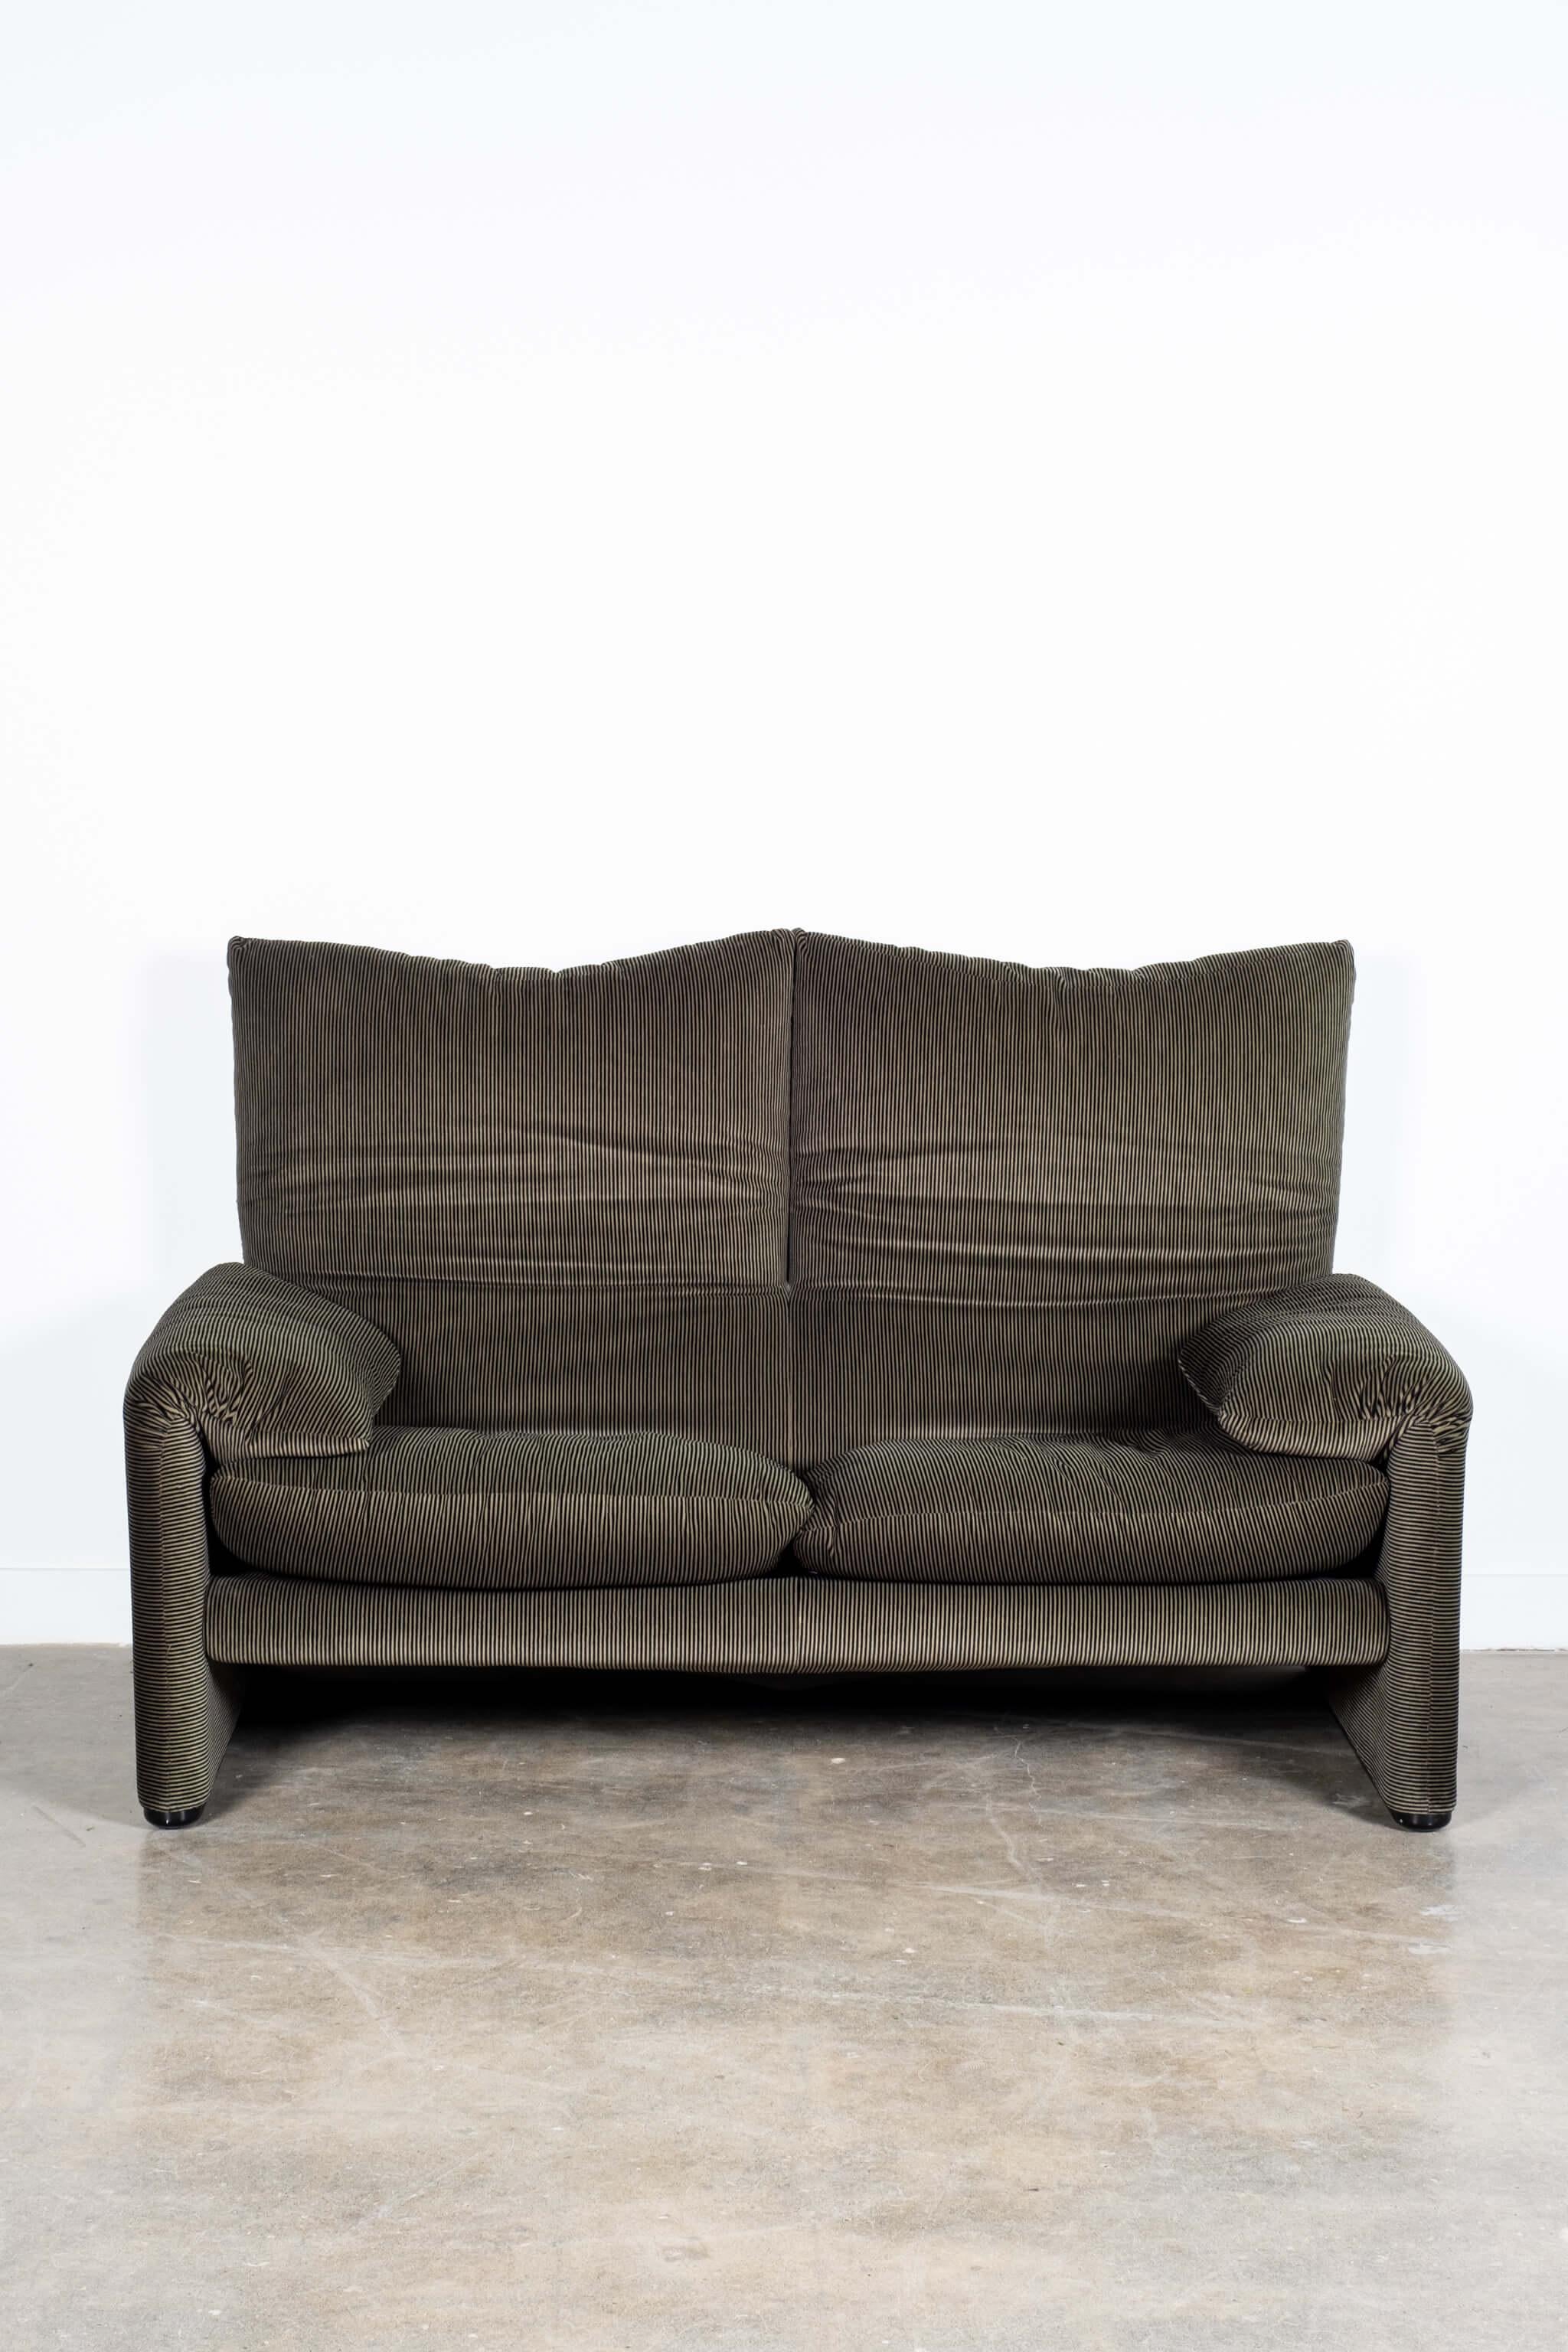 Maralunga 2-Seater Sofa in Original Velvet by Vico Magistretti for Cassina 1